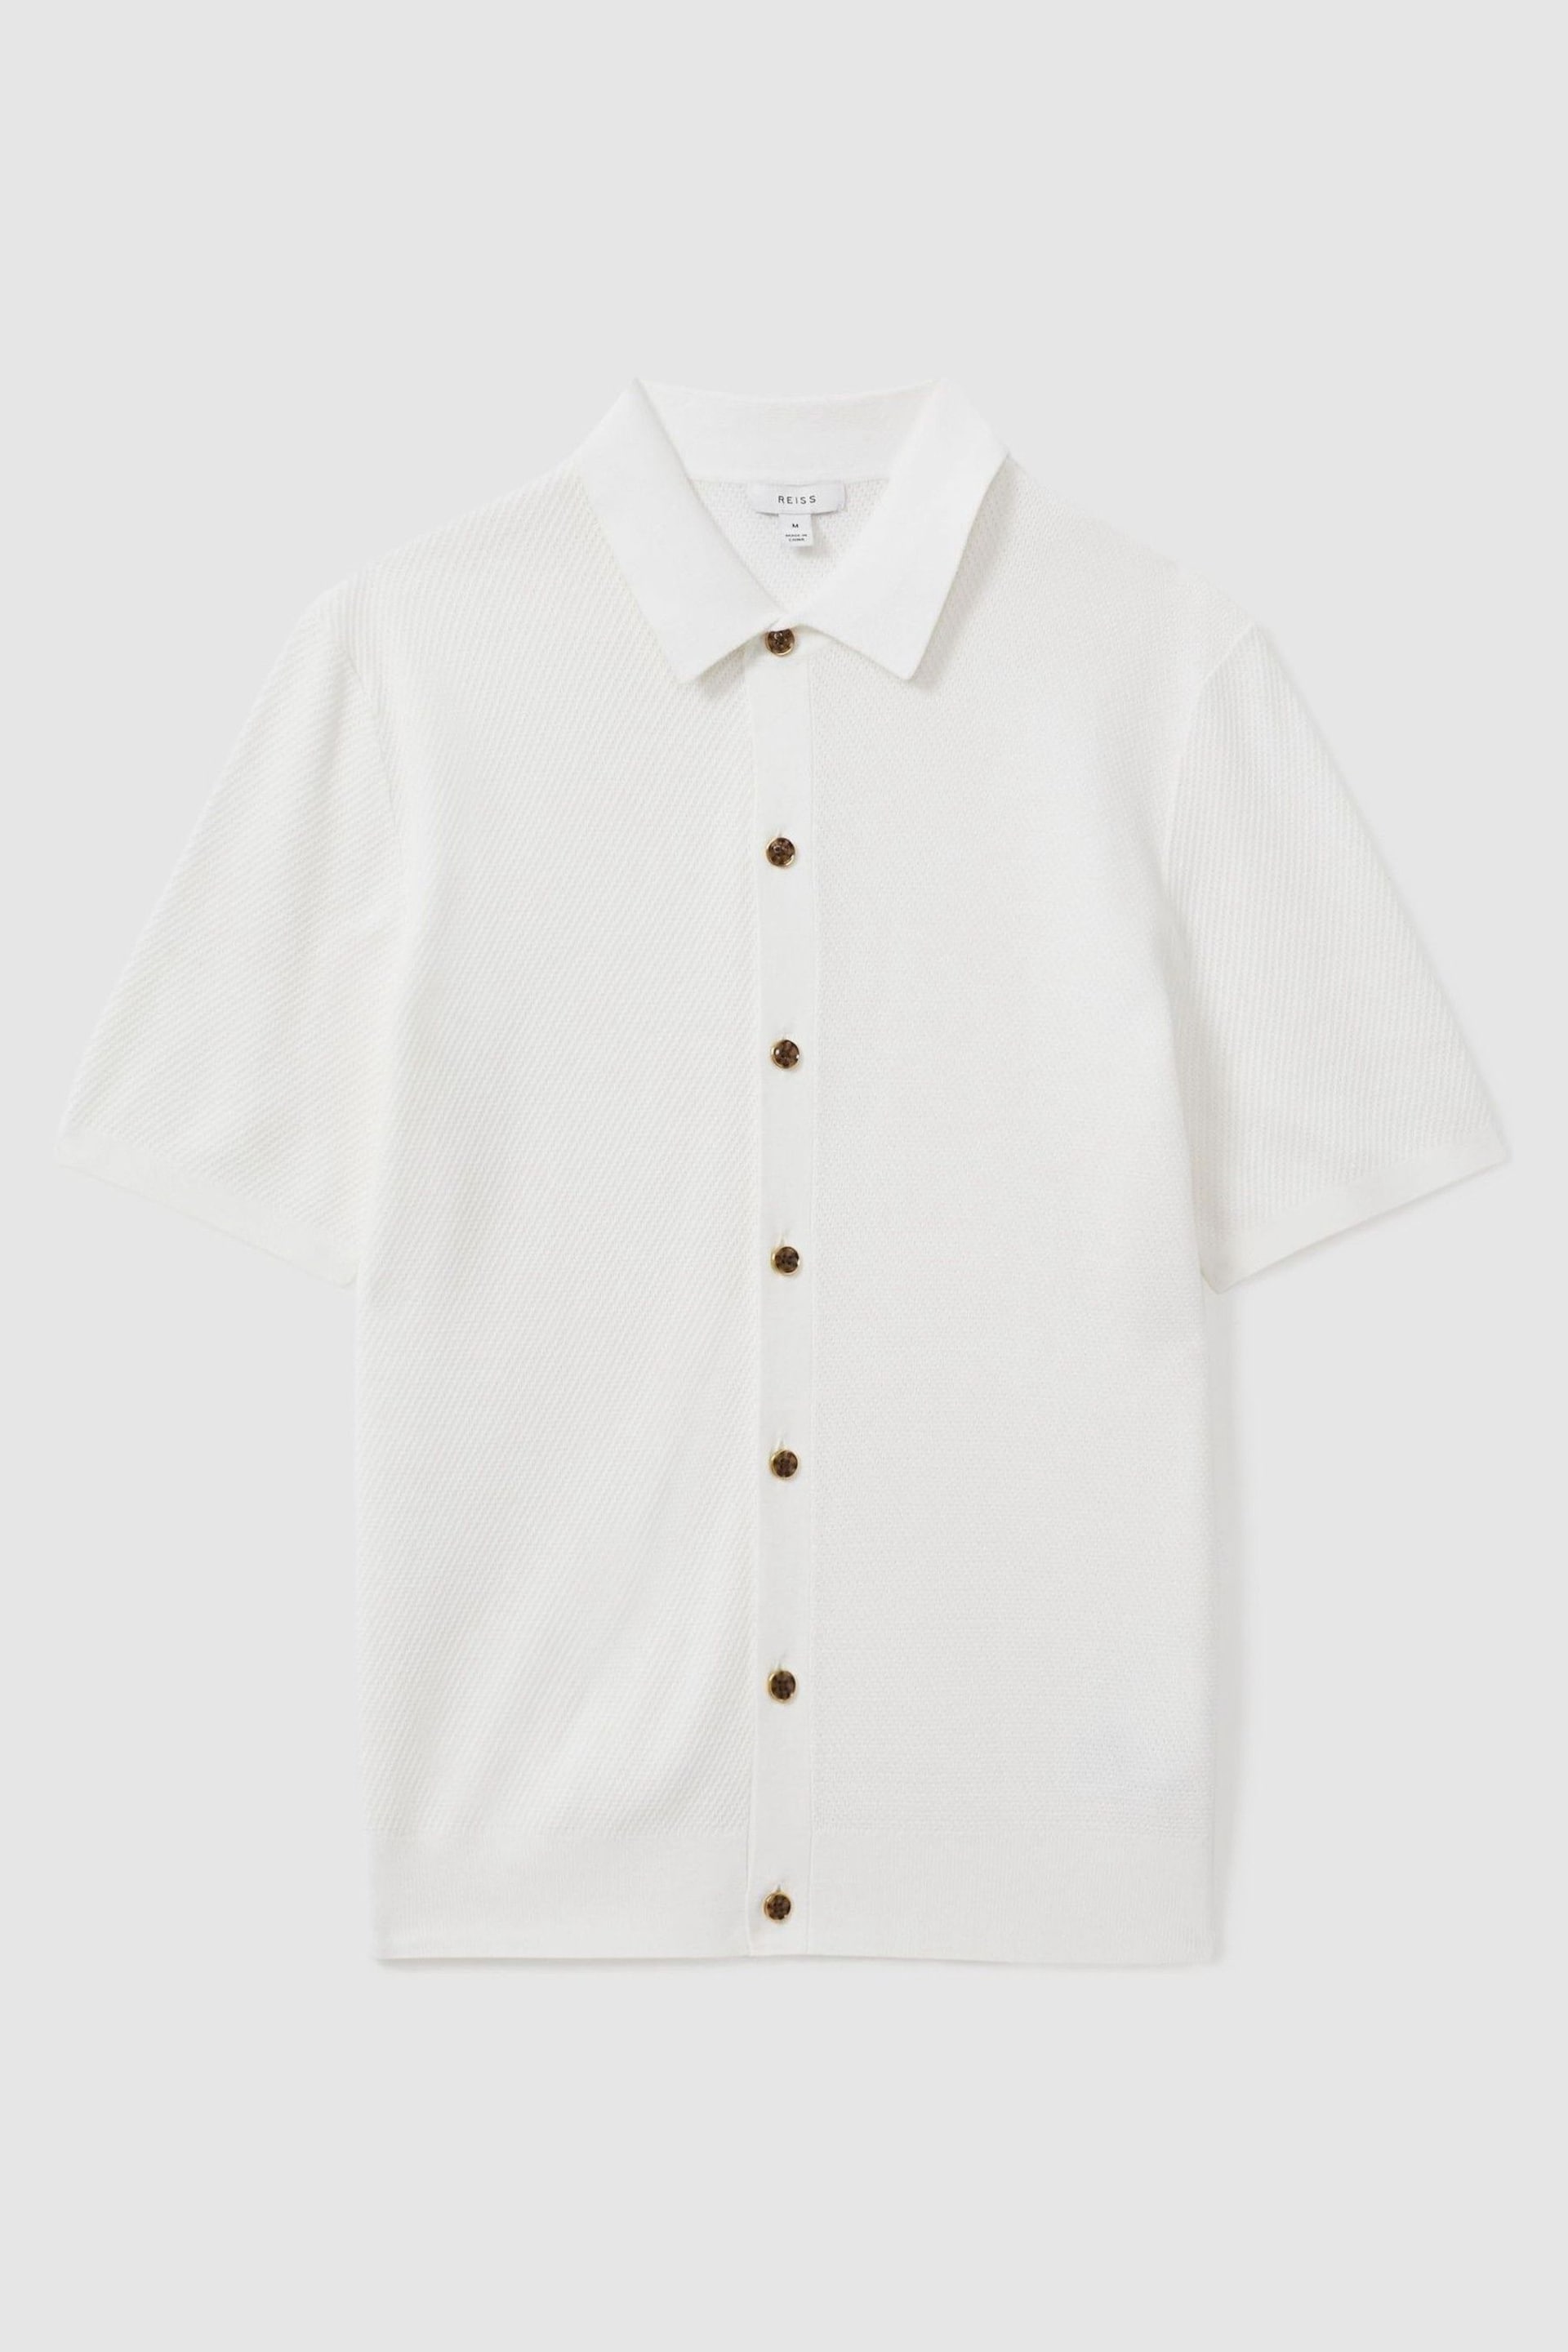 Reiss White Bravo Cotton Blend Textured Shirt - Image 2 of 6